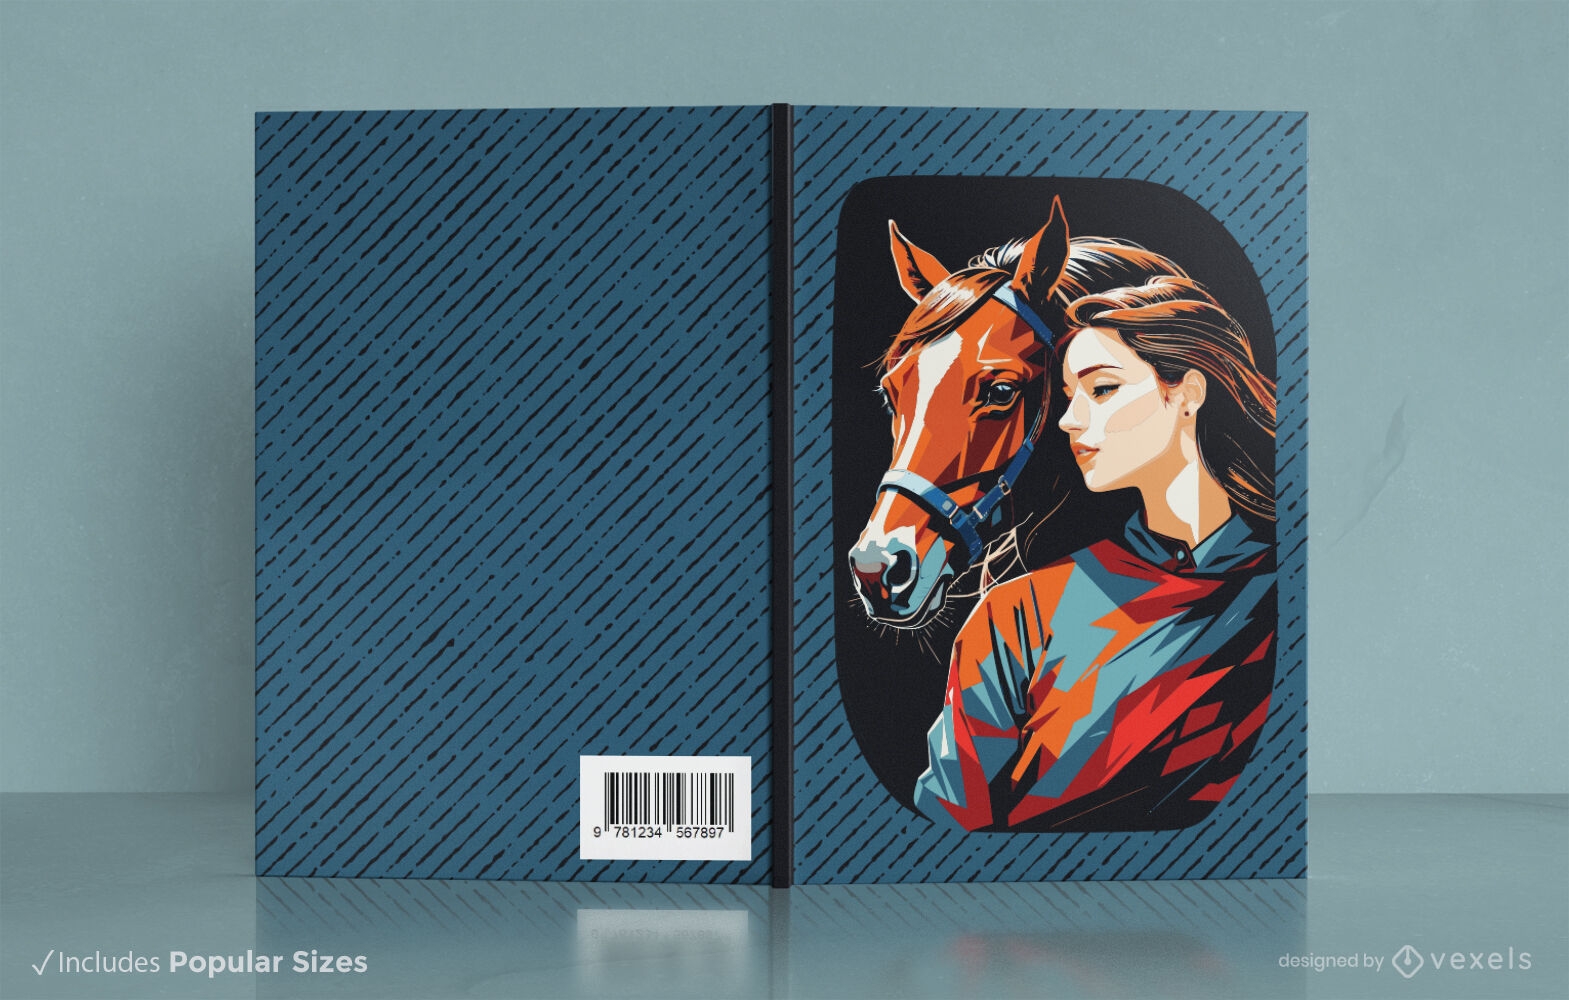 Equestrian bond book cover design